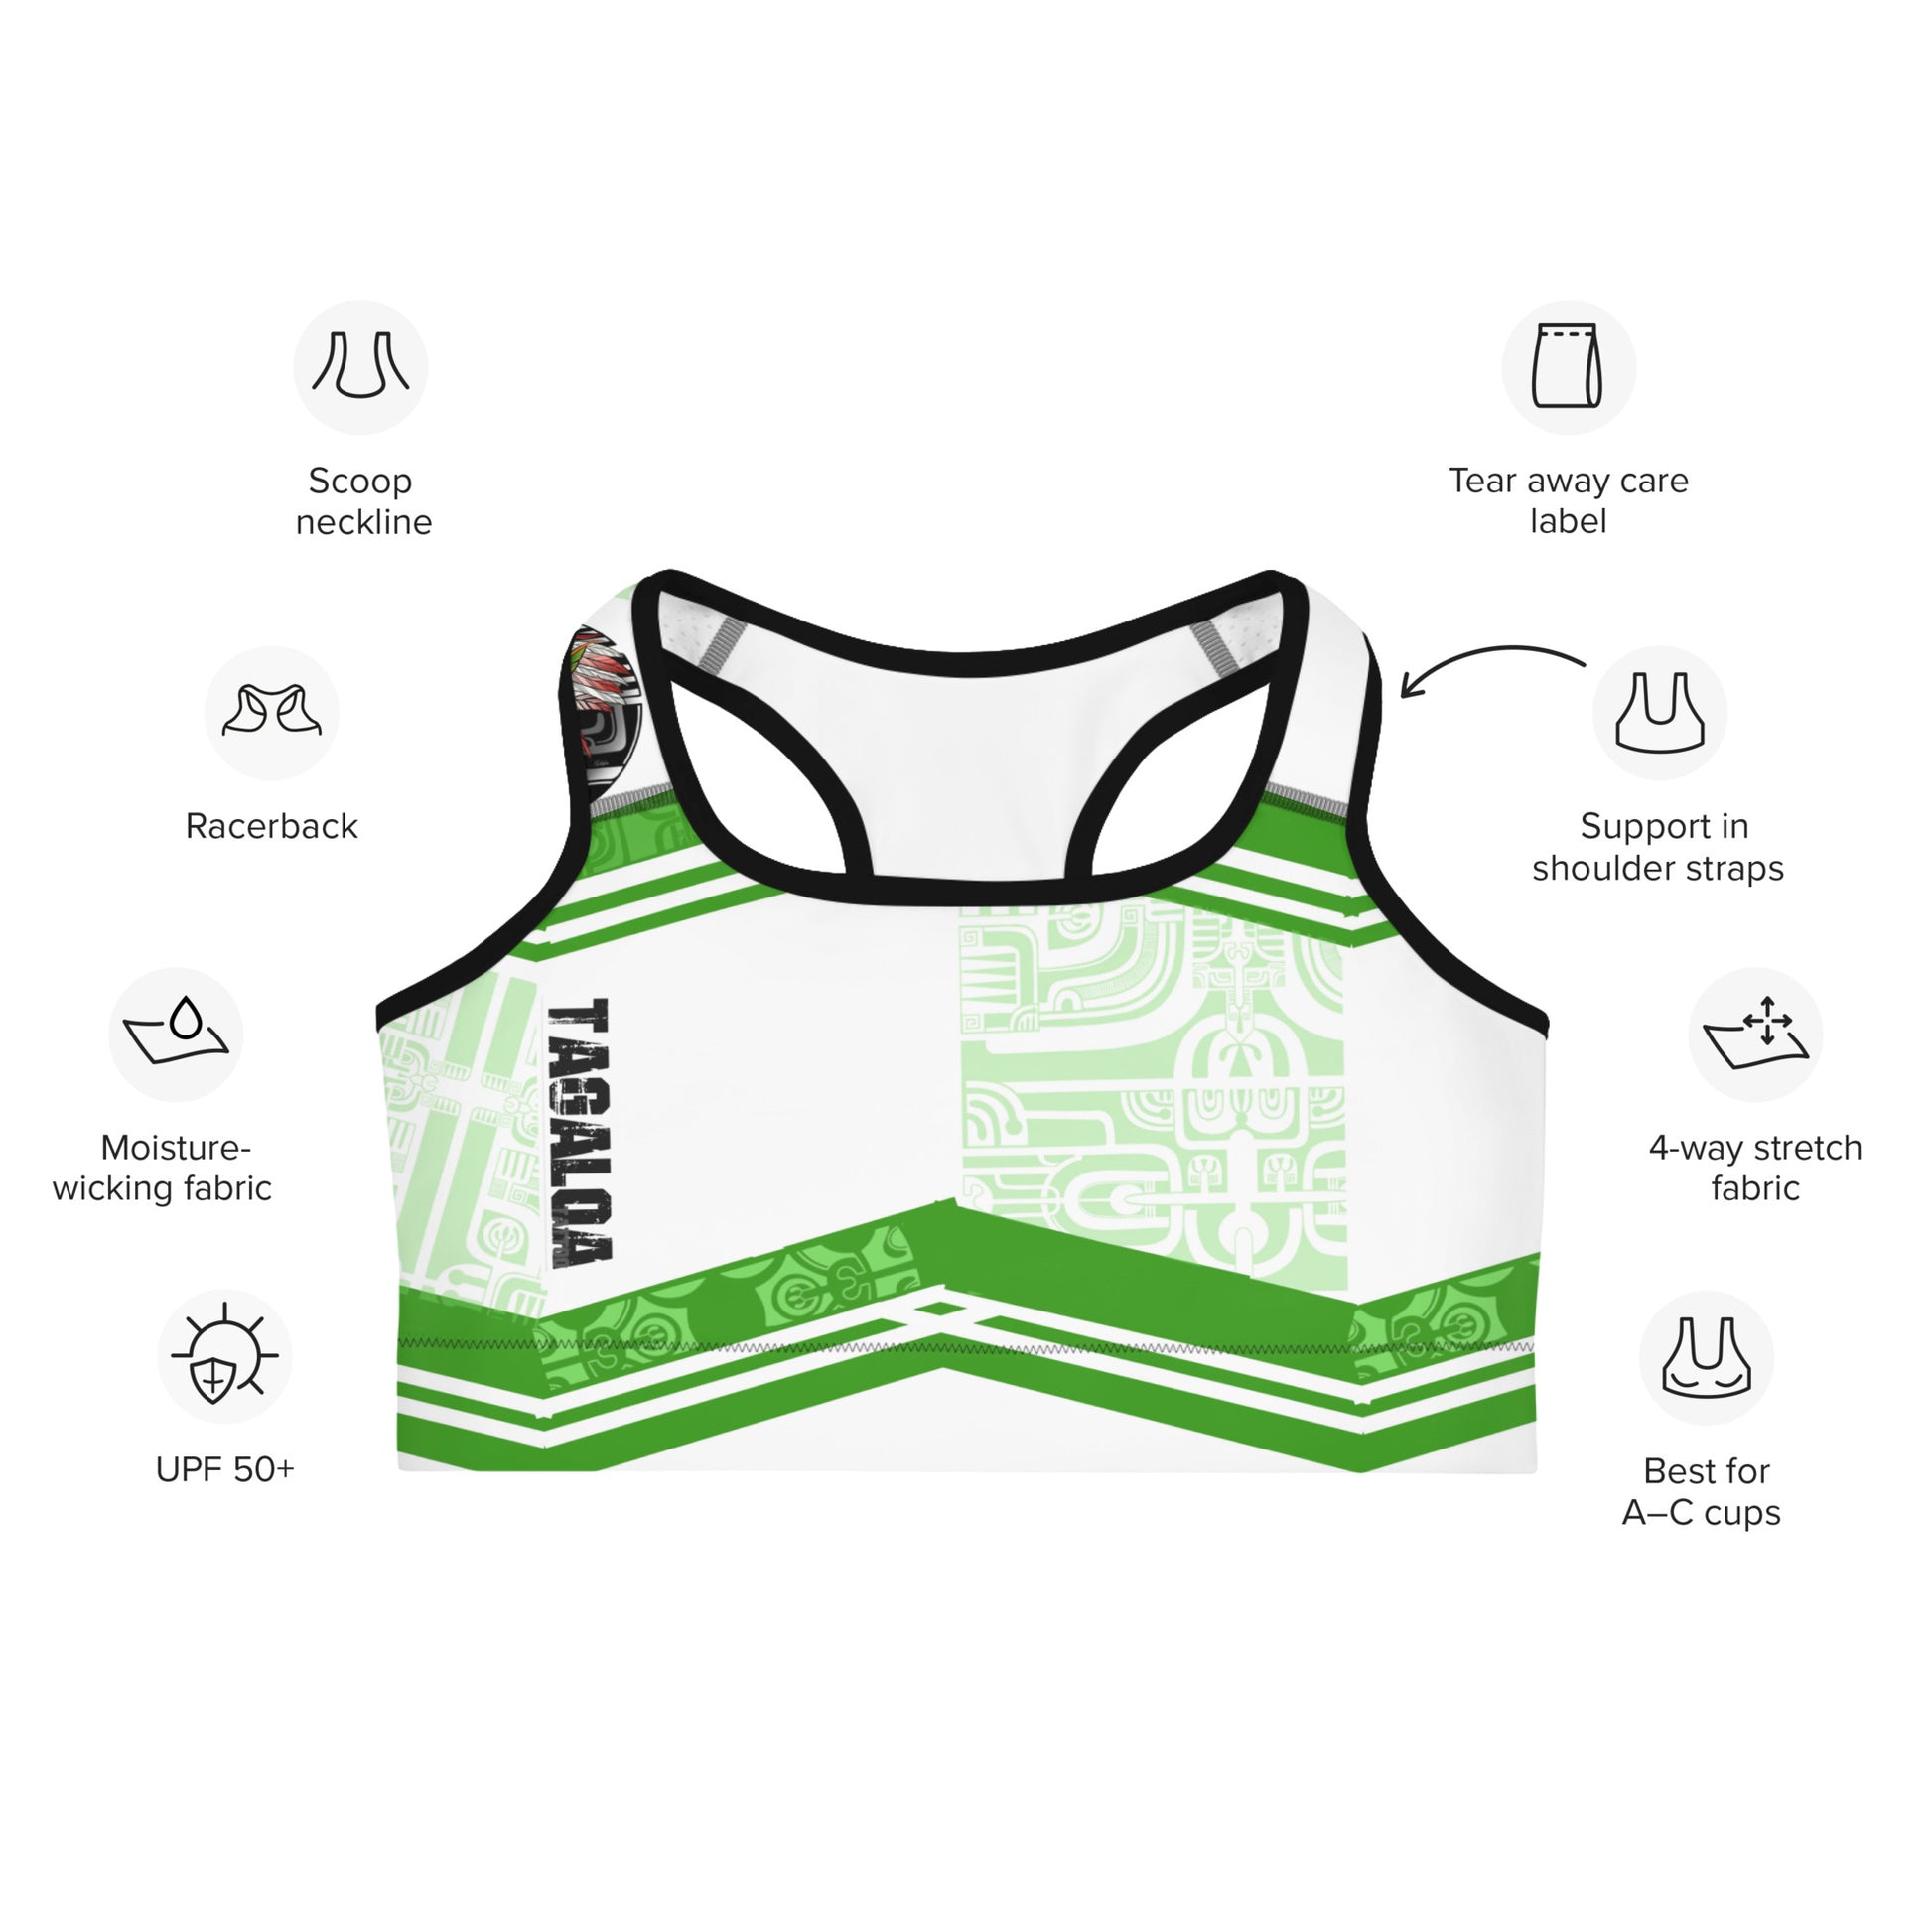 Polynesian Green Style Graphic Sports bra